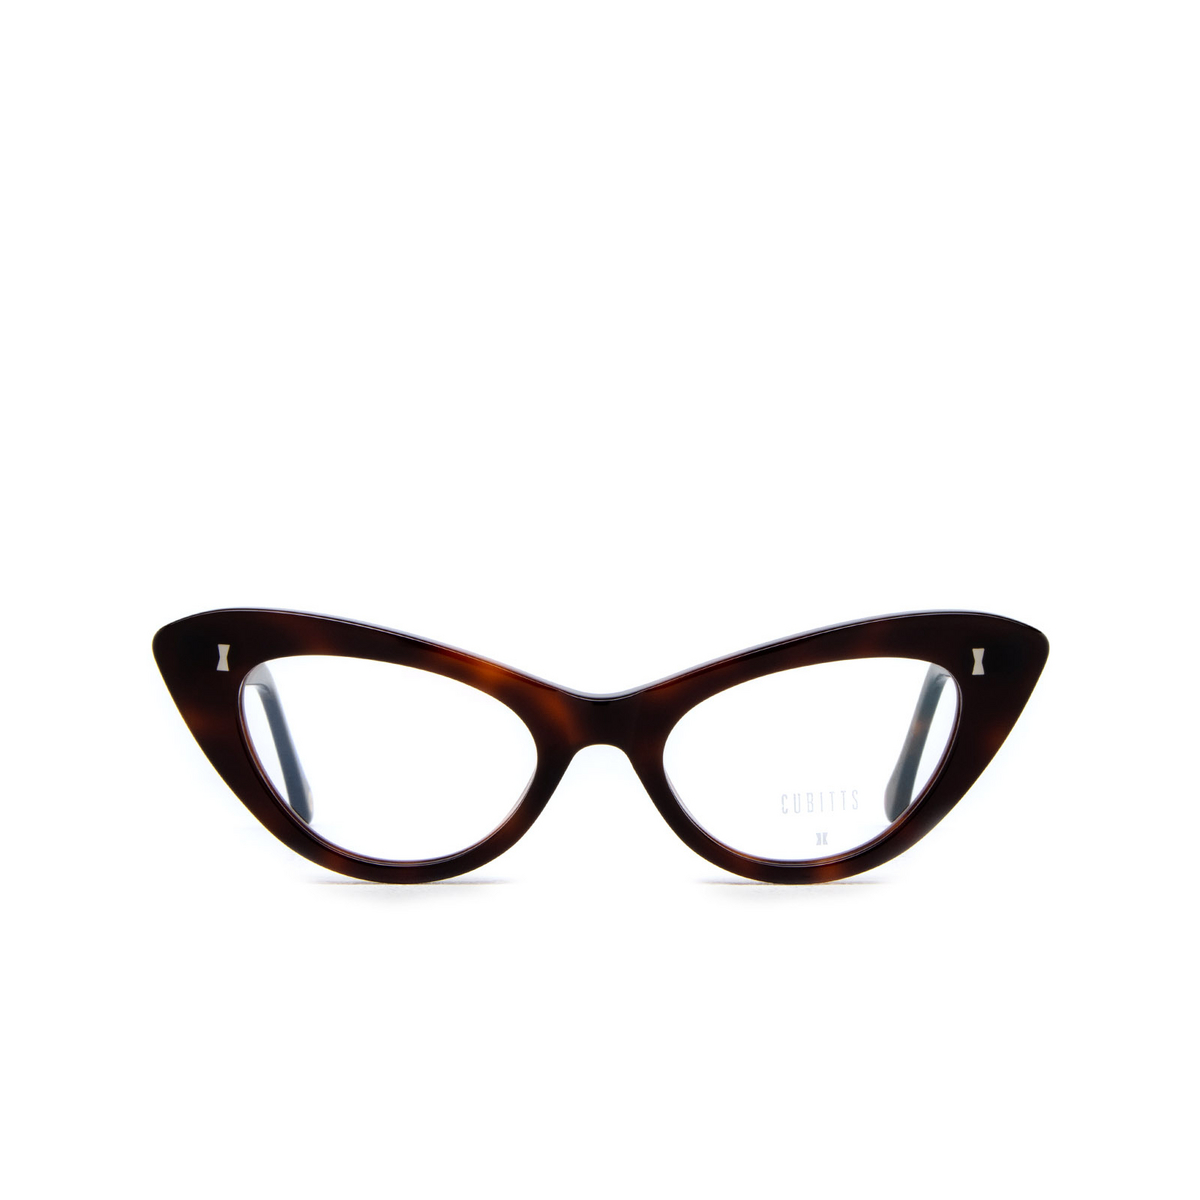 Cubitts LAVINA Eyeglasses LAV-R-DAR Dark Turtle - front view